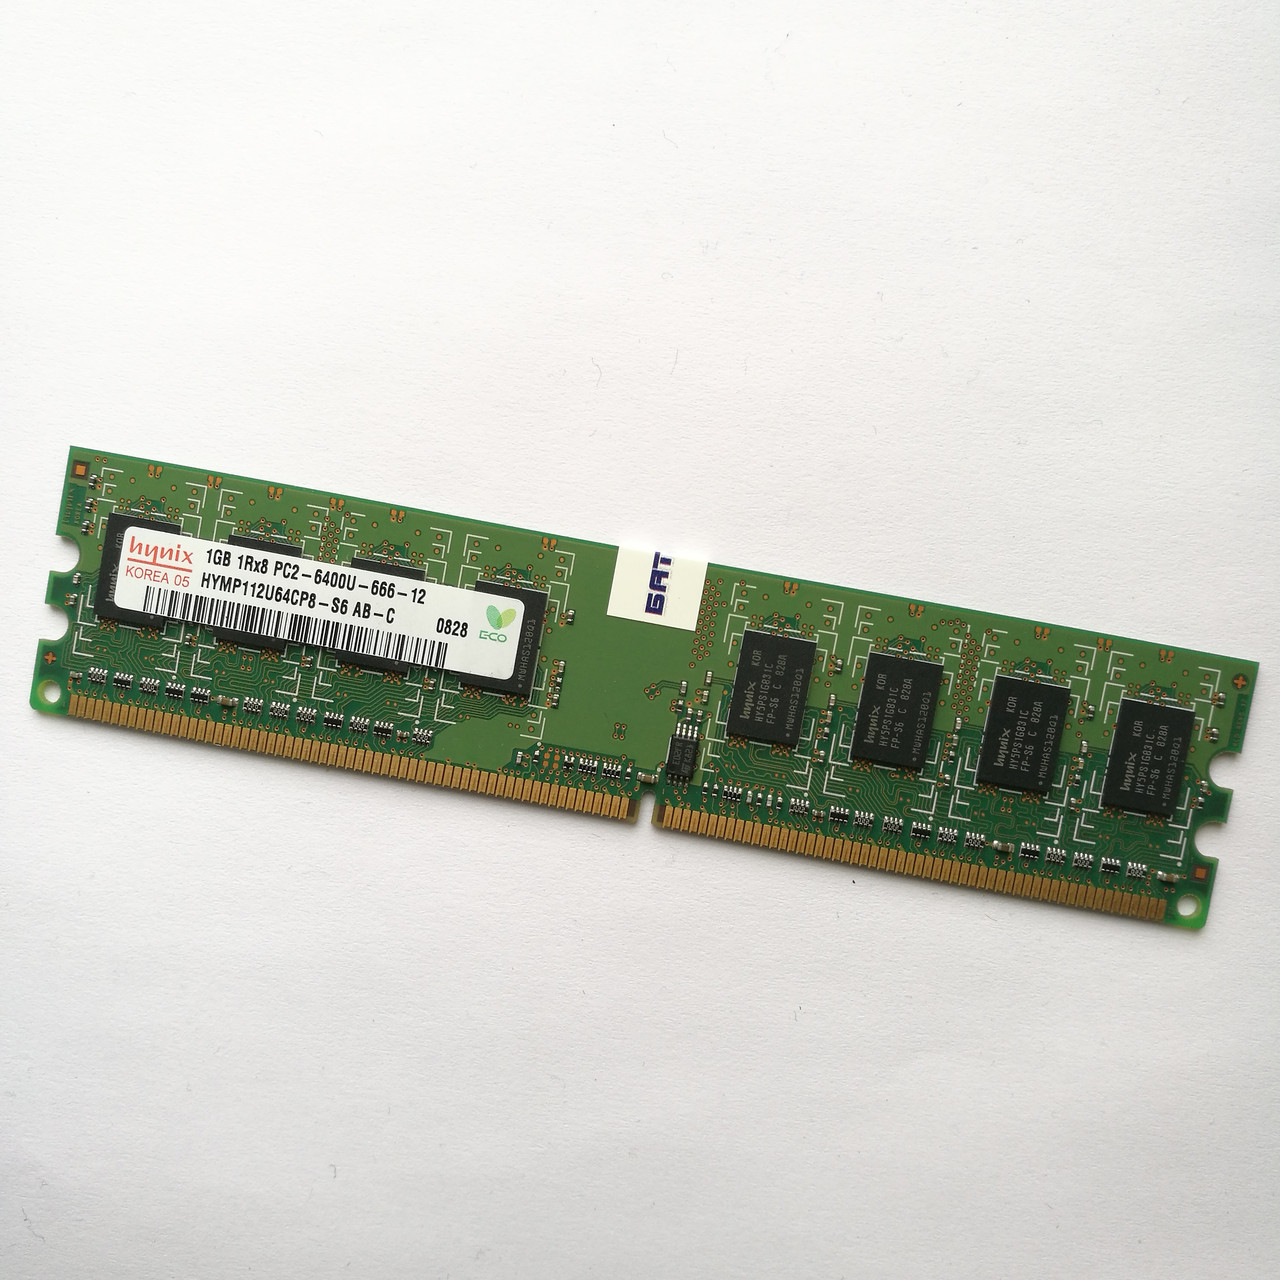 Оперативная память Hynix DDR2 1Gb 800MHz PC2 6400U CL6 (HMP112U64CP8-S6 AB-C) Б/У, фото 1